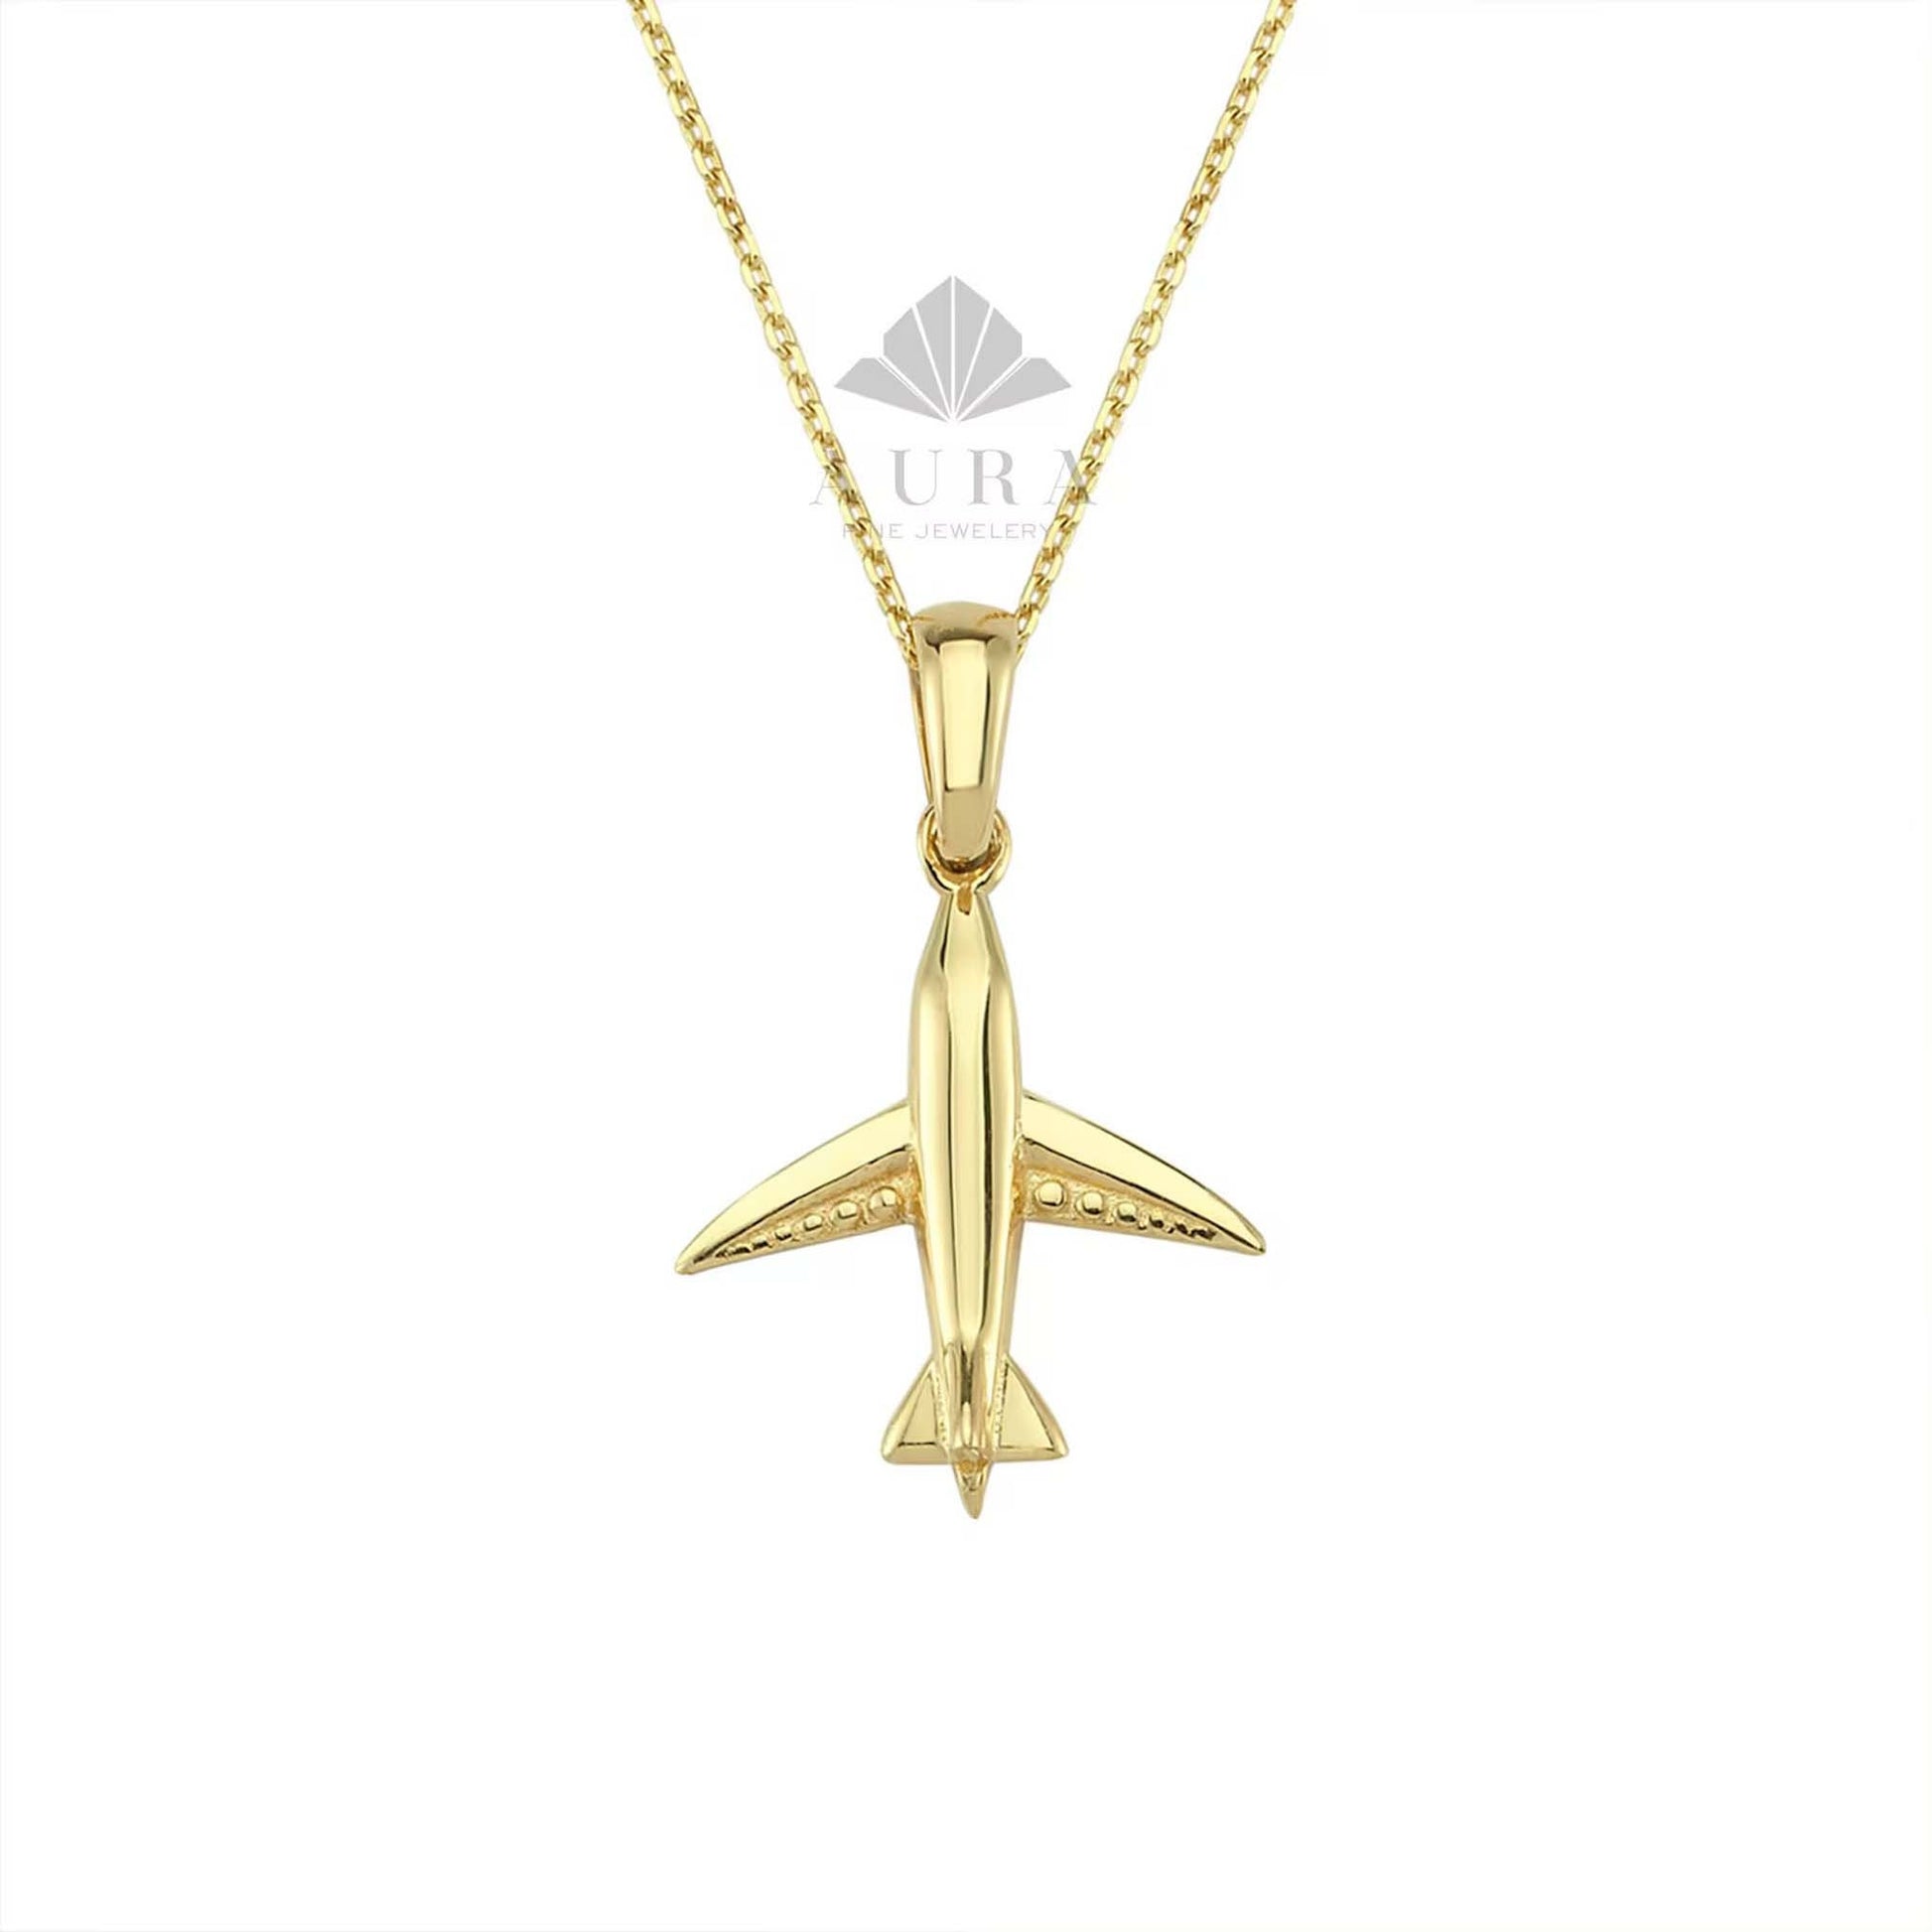 14K Gold Airplane Necklace, Traveler Necklace, Airplane Charm Jewelry, Pilot Flight Attendant Gift, Journey Fly, Dainty Aviation Graduation